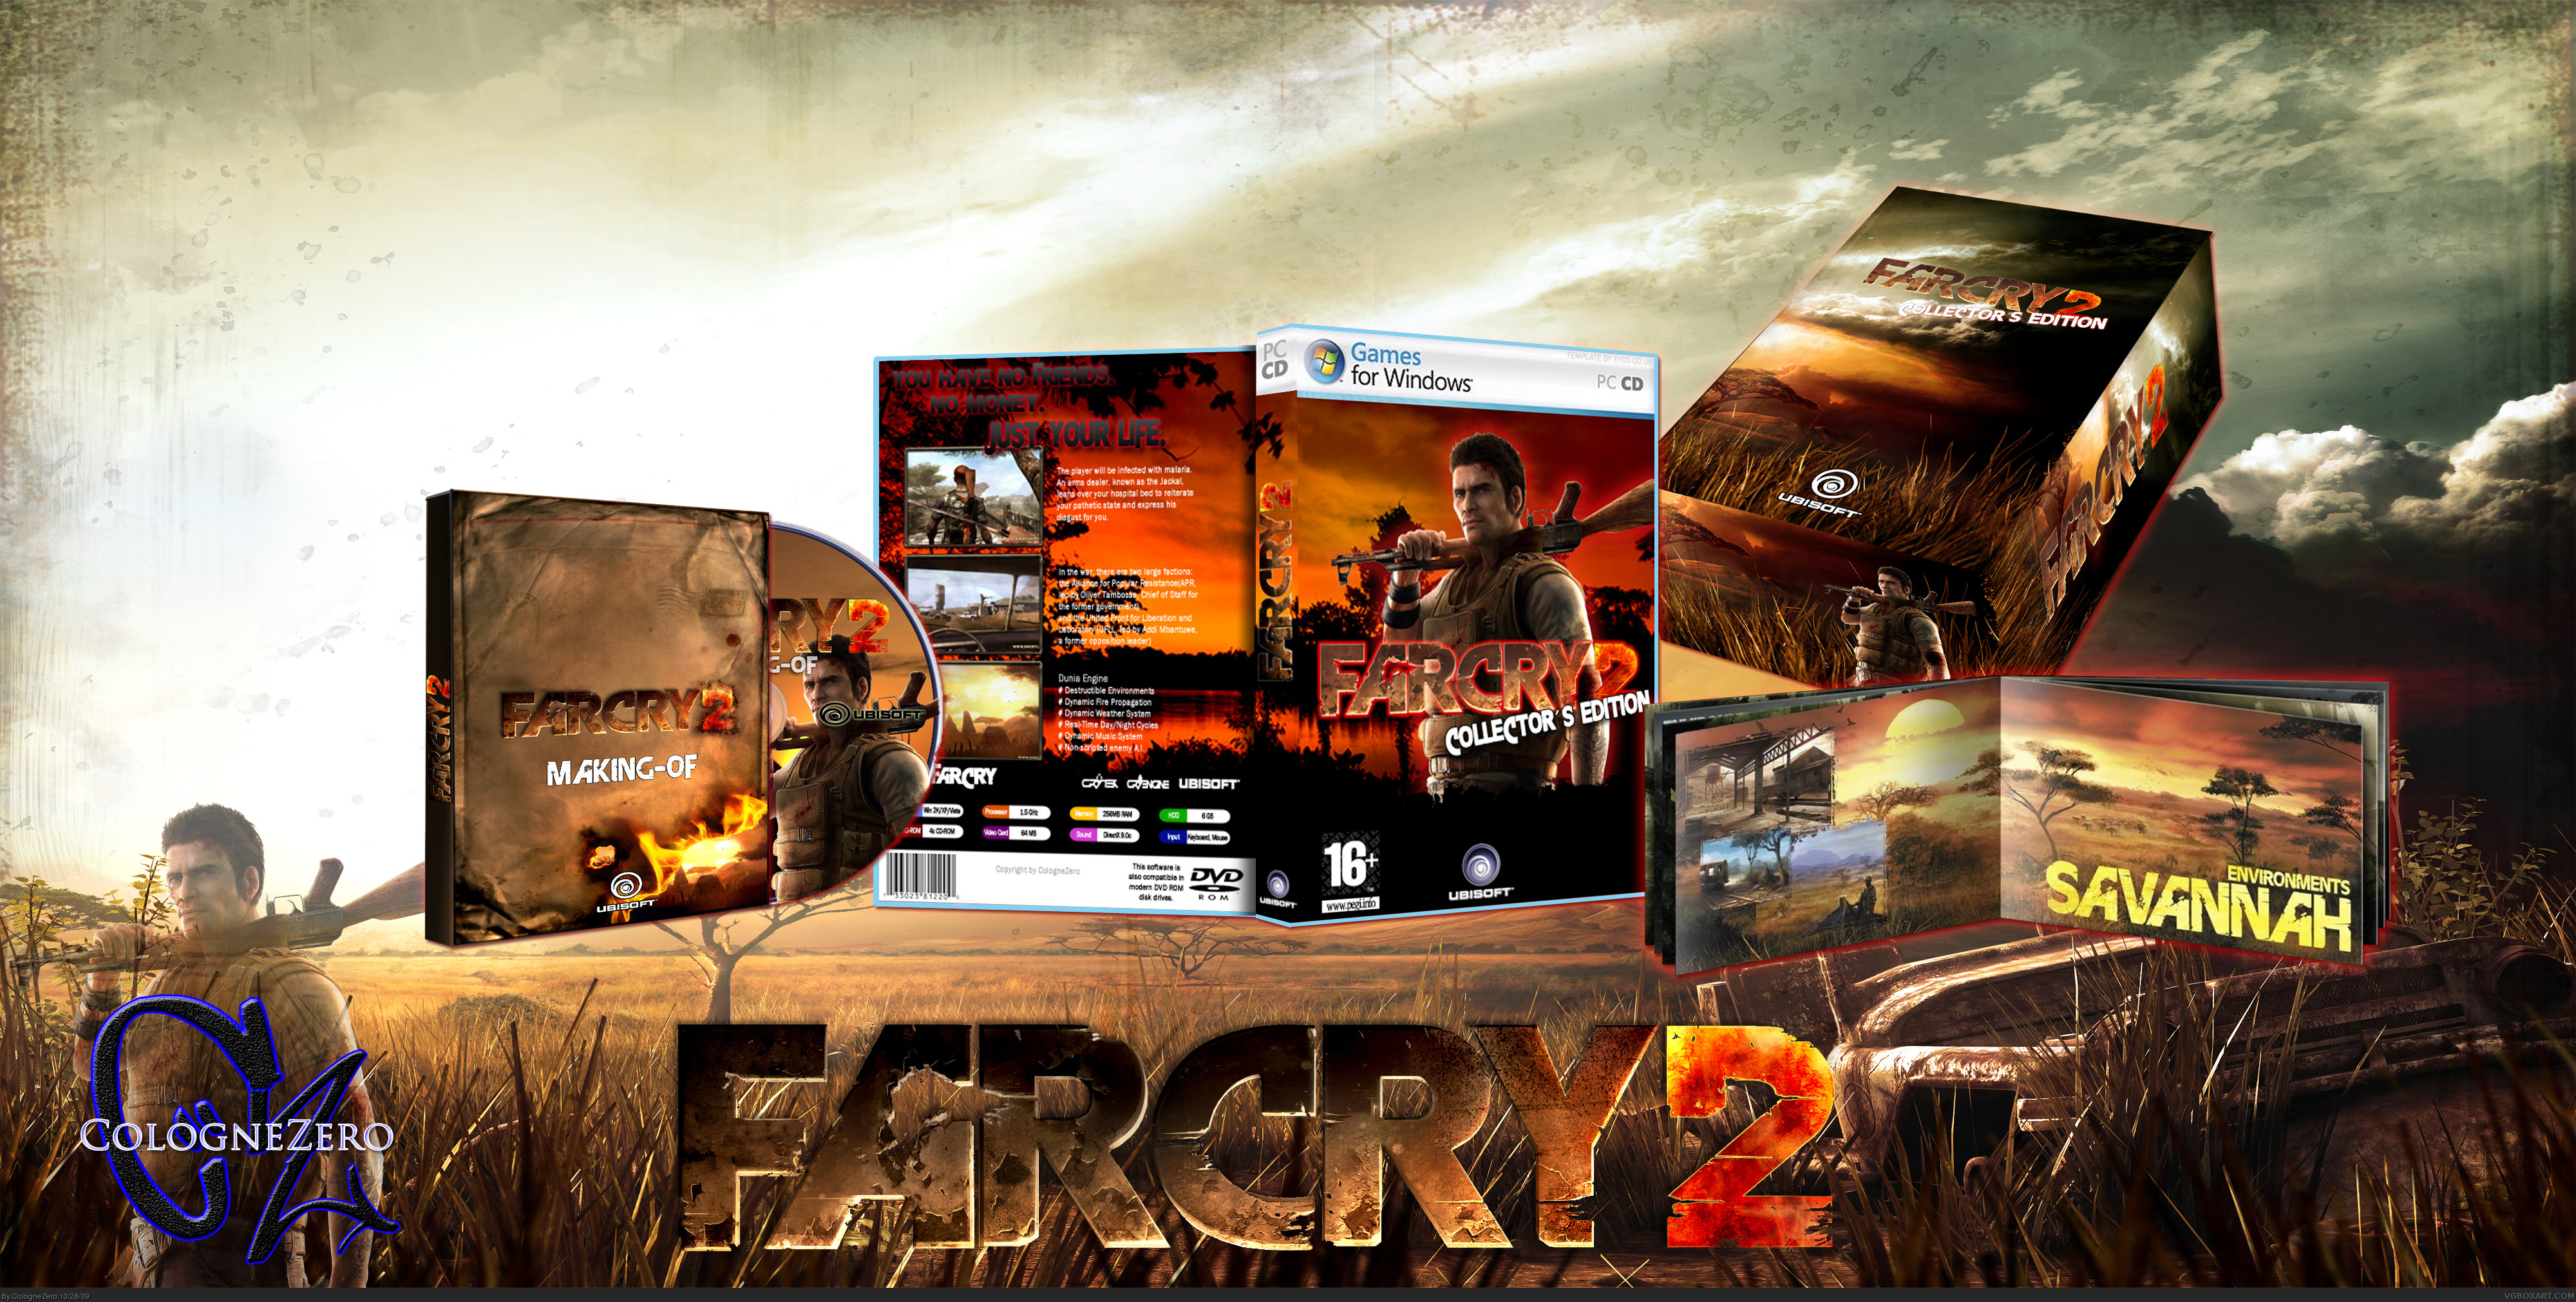 Far Cry 2 Collector's Edition box cover